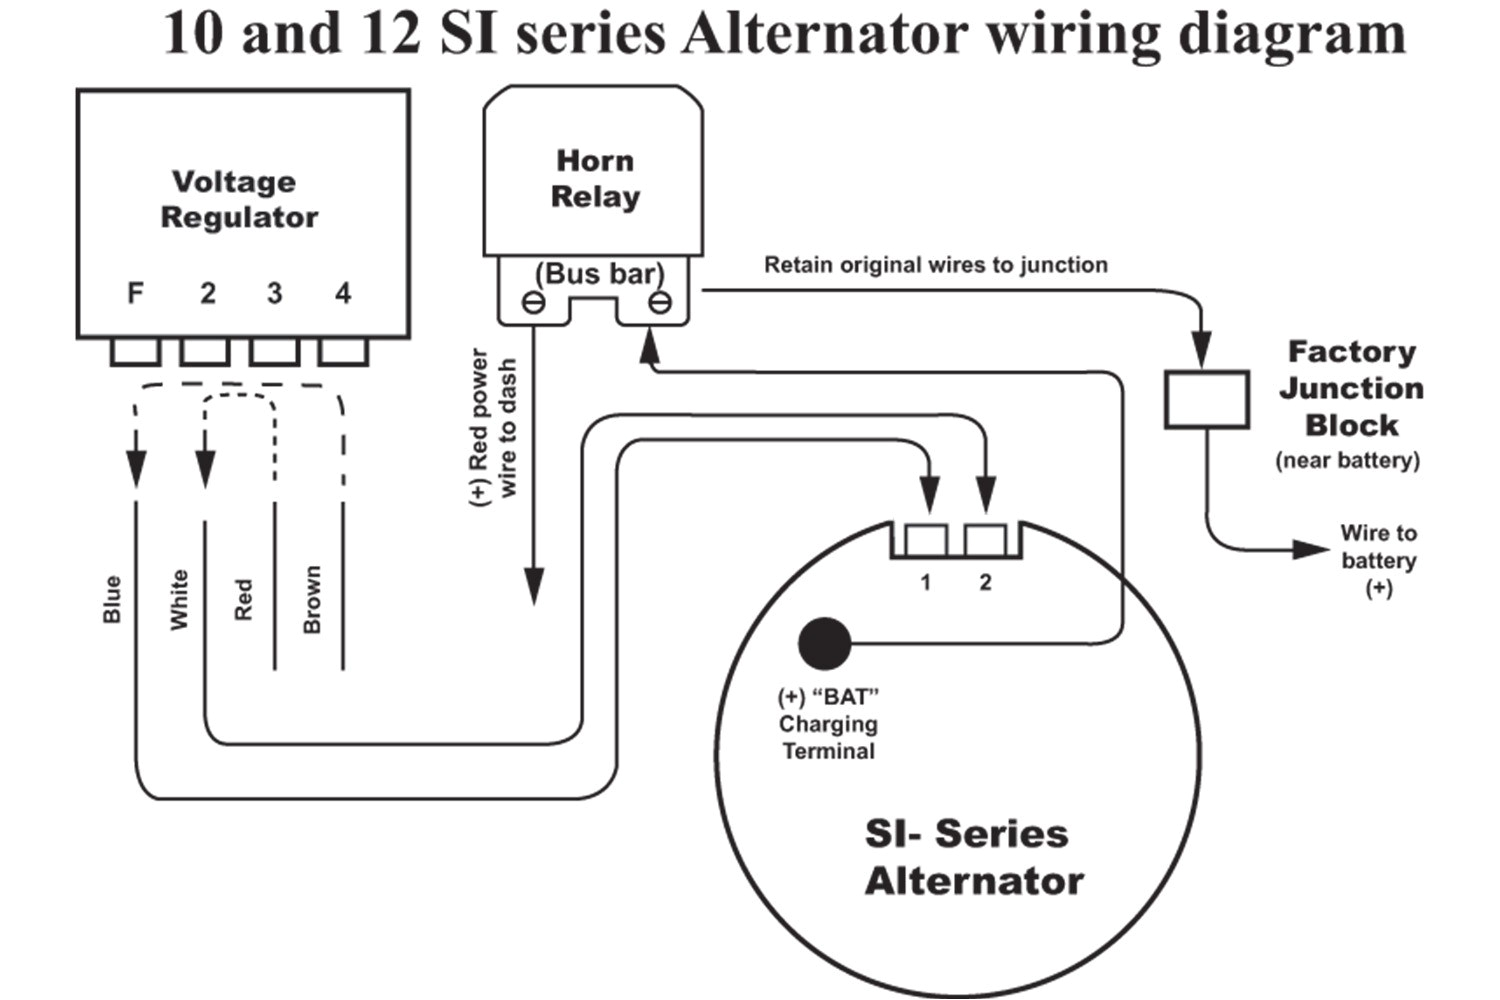 arco marine alternator wiring diagram wiring diagram note arco alternator wiring diagram home wiring diagram arco